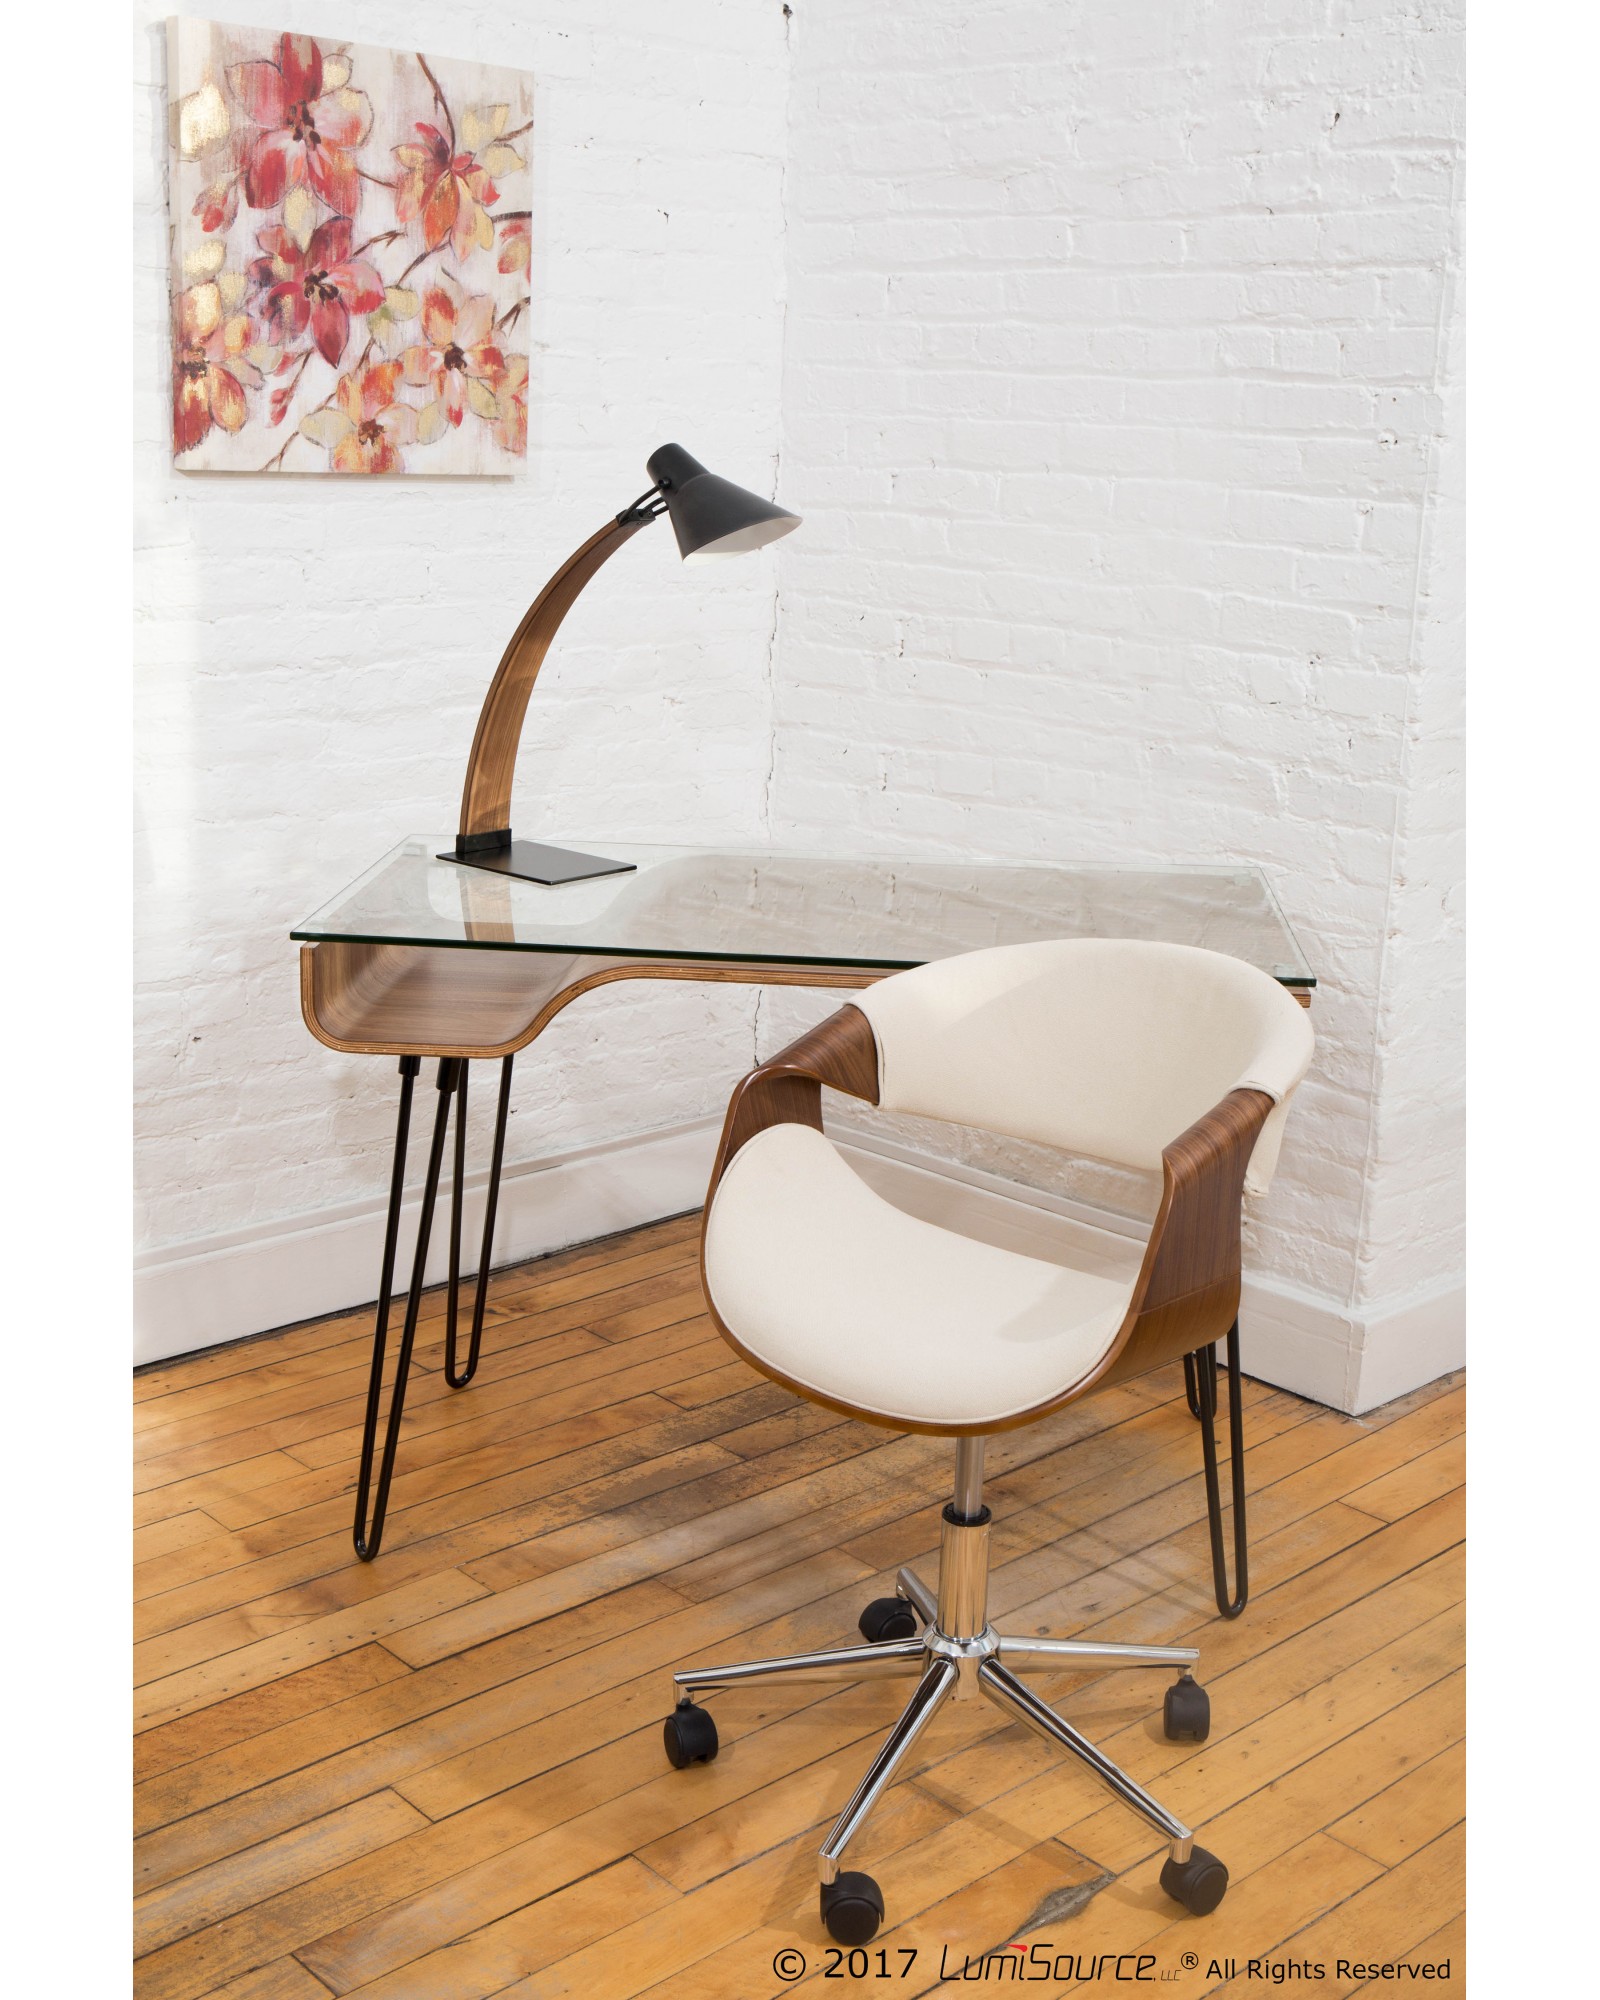 Curvo Mid-Century Modern Office Chair in Walnut and Cream